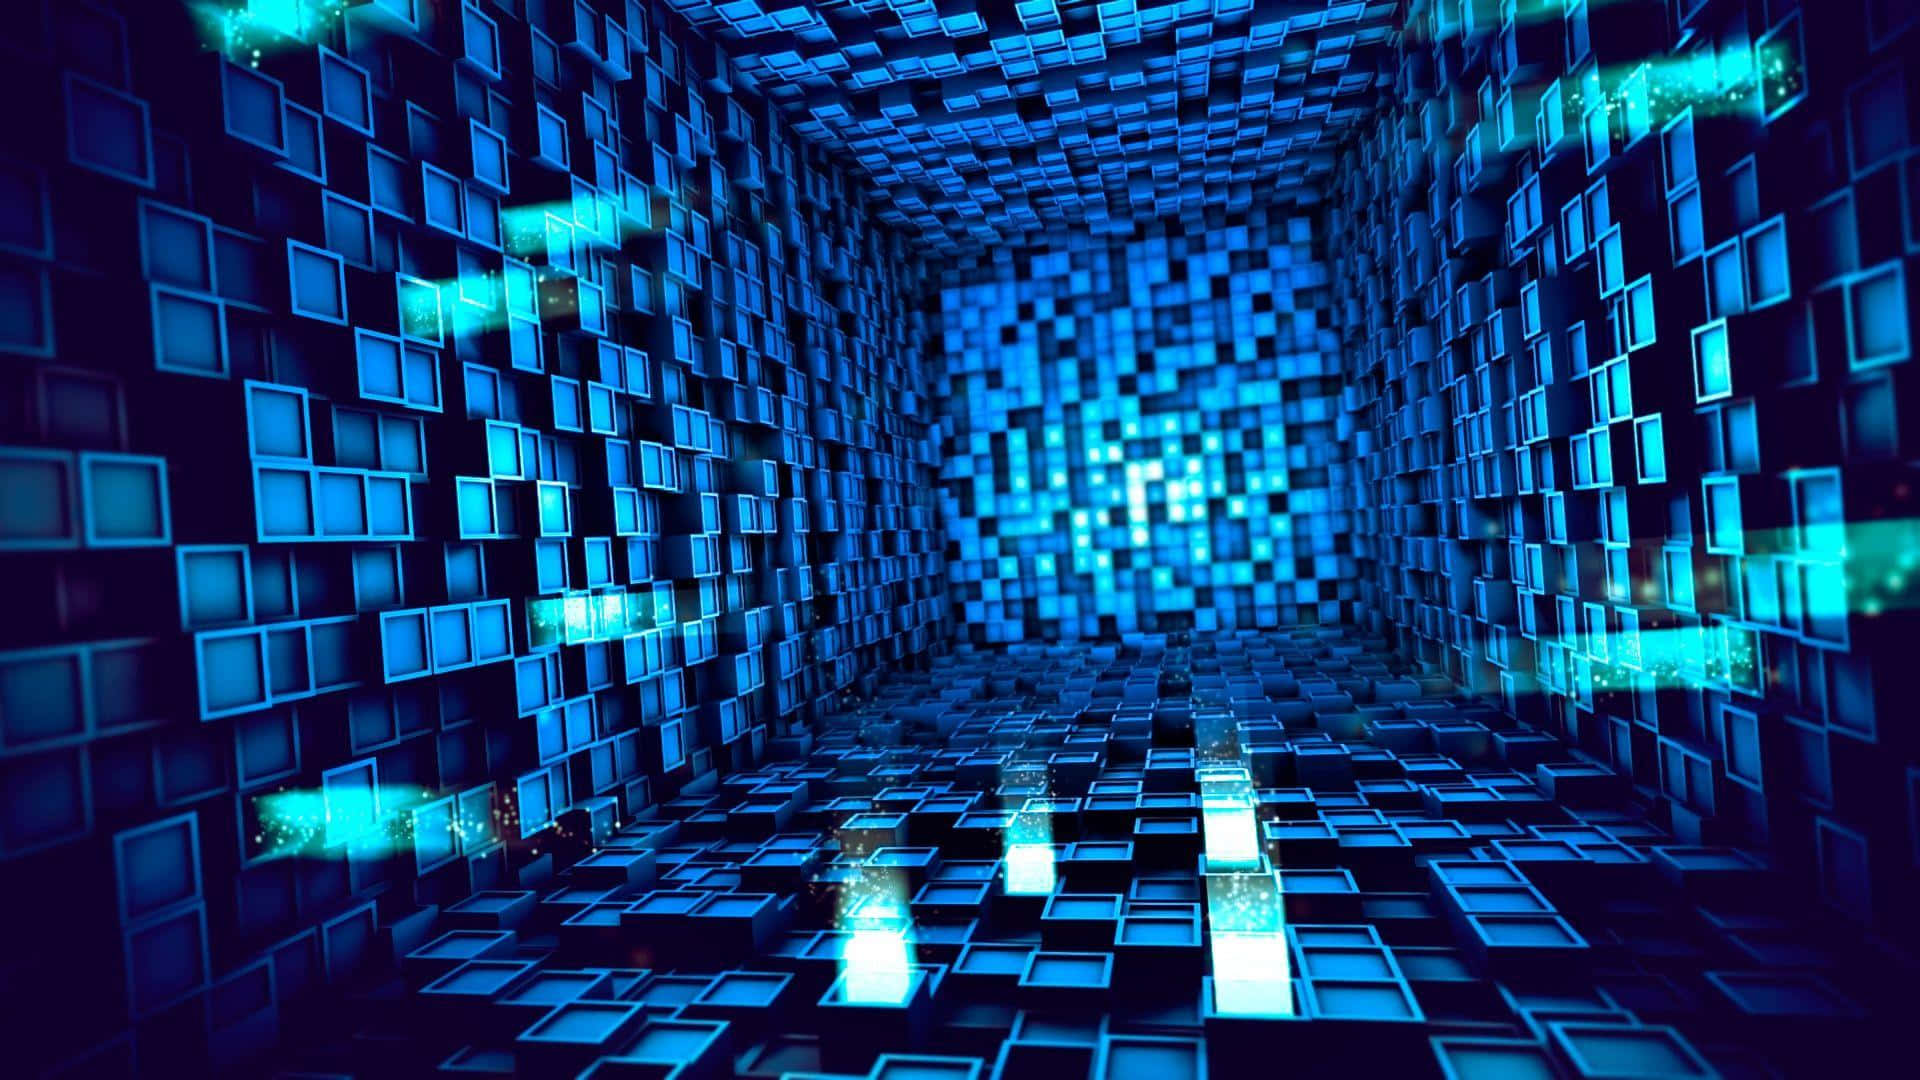 Blue Cubes With Uneven Levels Tech Background